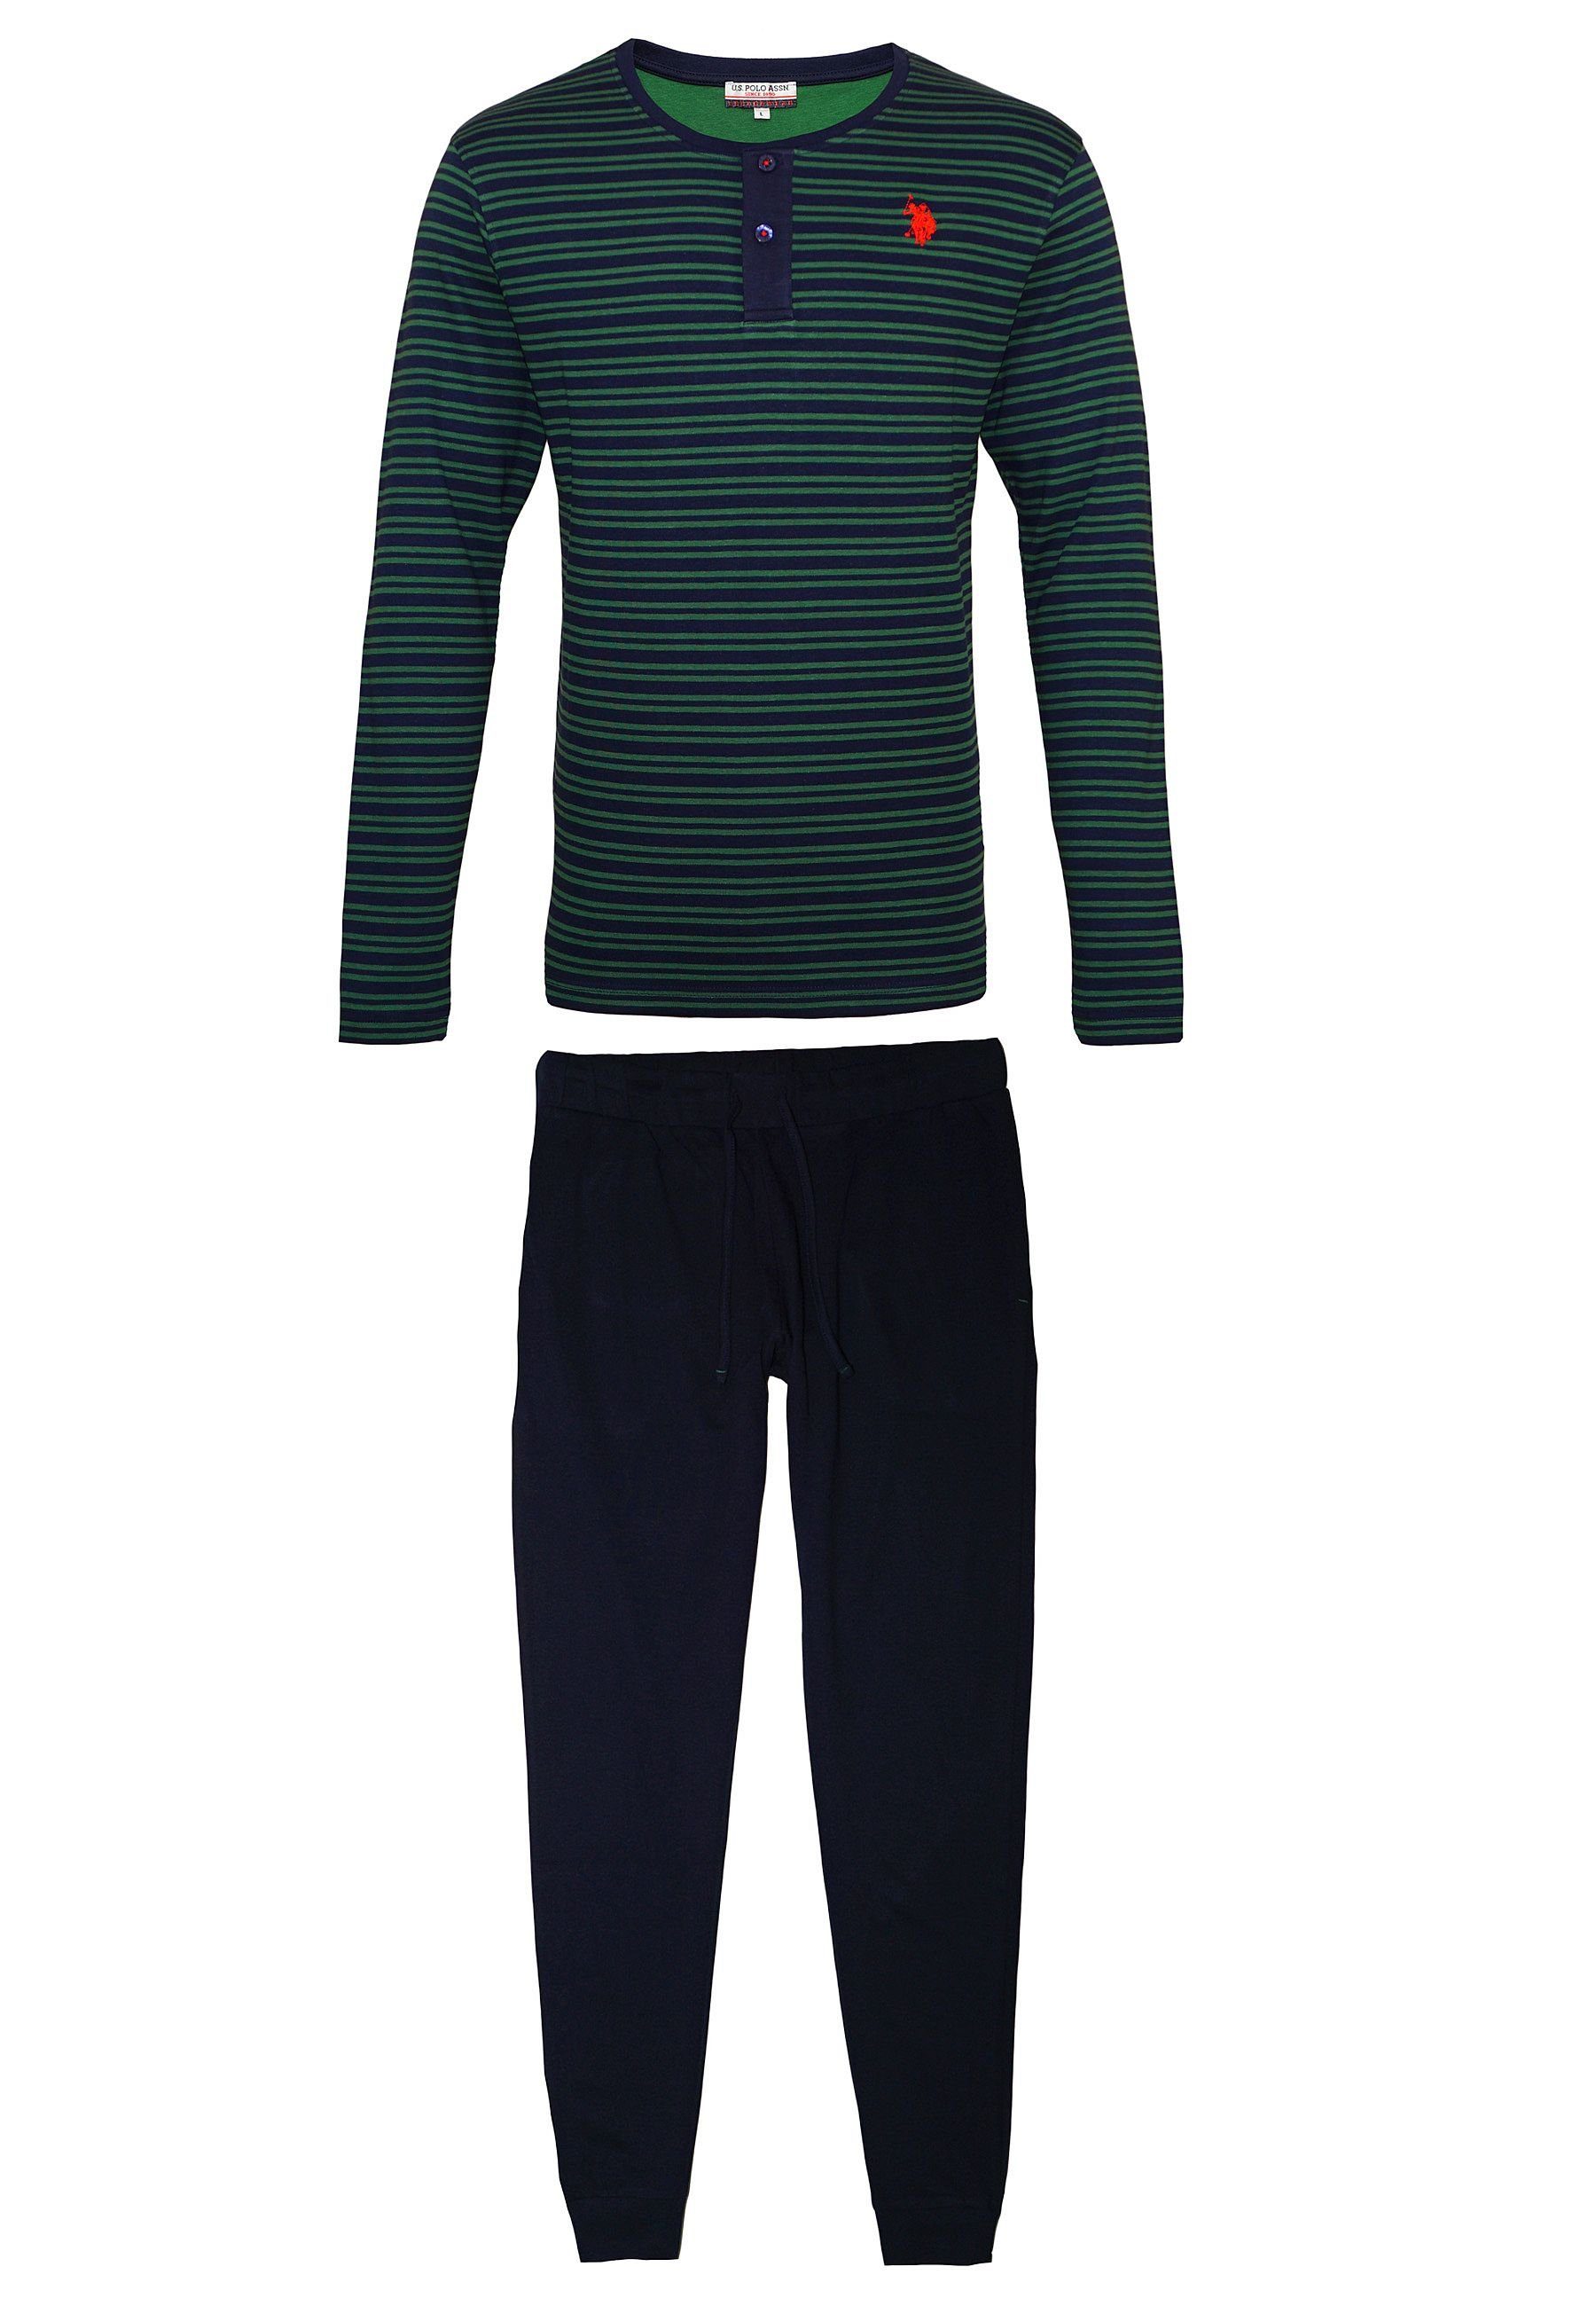 U.S. Polo Assn Pyjama Pyjama Set Longsleeve und Hose im Set dunkelgrün